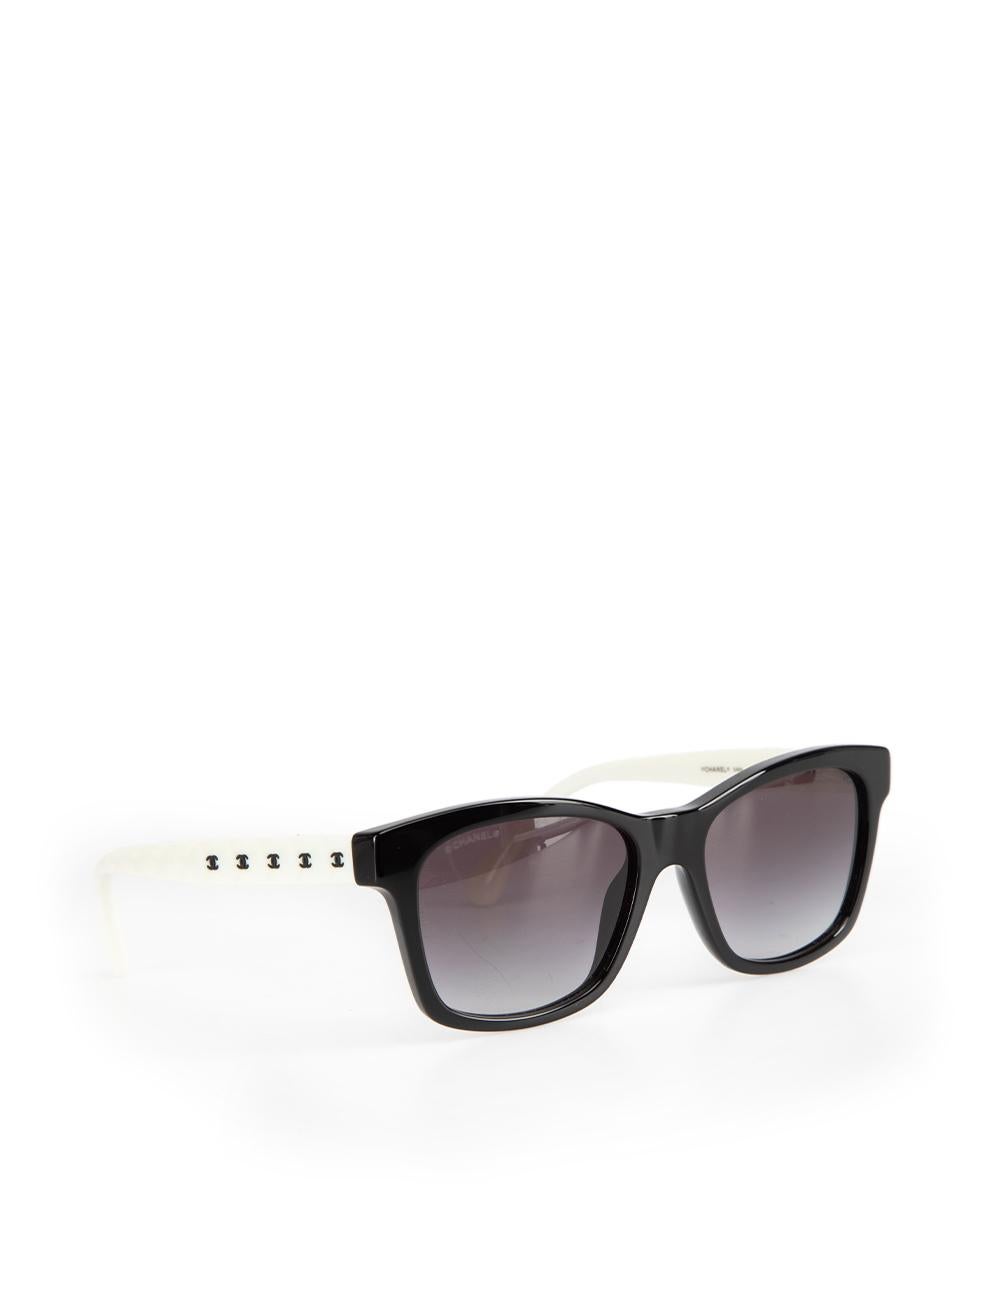 Chanel Black & White Square Sunglasses In New Condition For Sale In London, GB